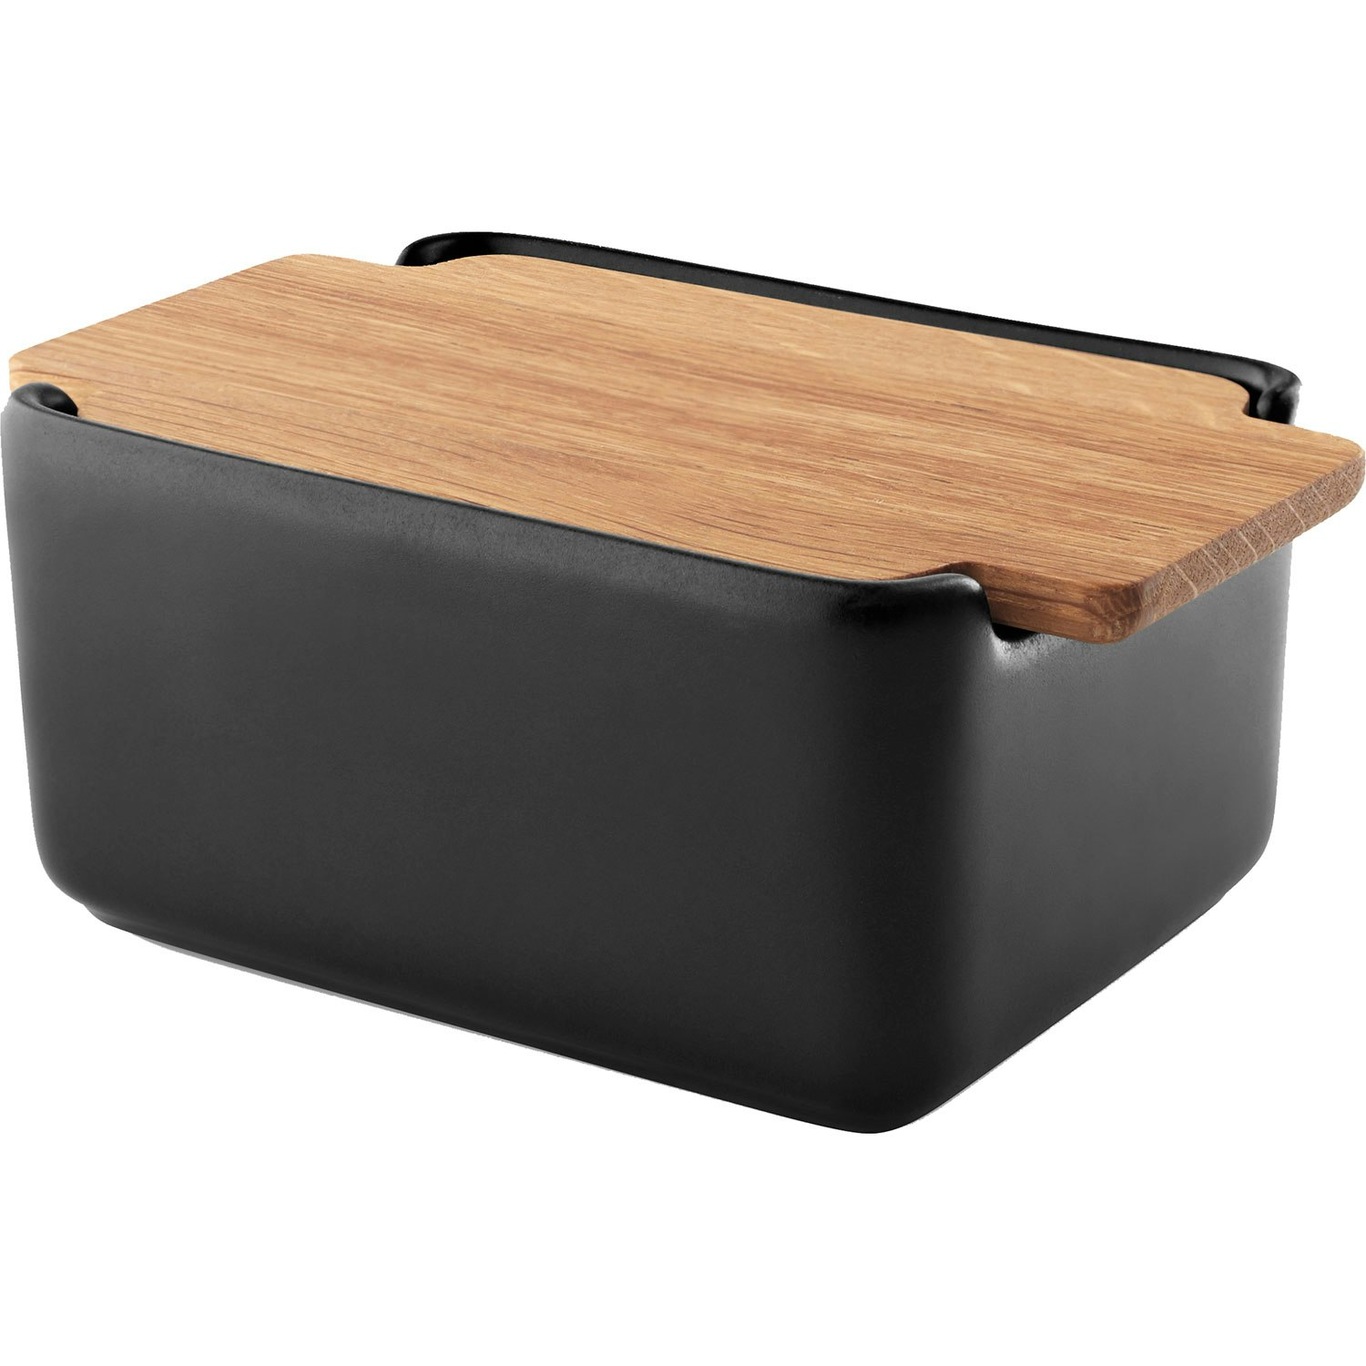 https://royaldesign.com/image/2/eva-solo-butterbox-m-lid-oak-nordic-k-0?w=800&quality=80